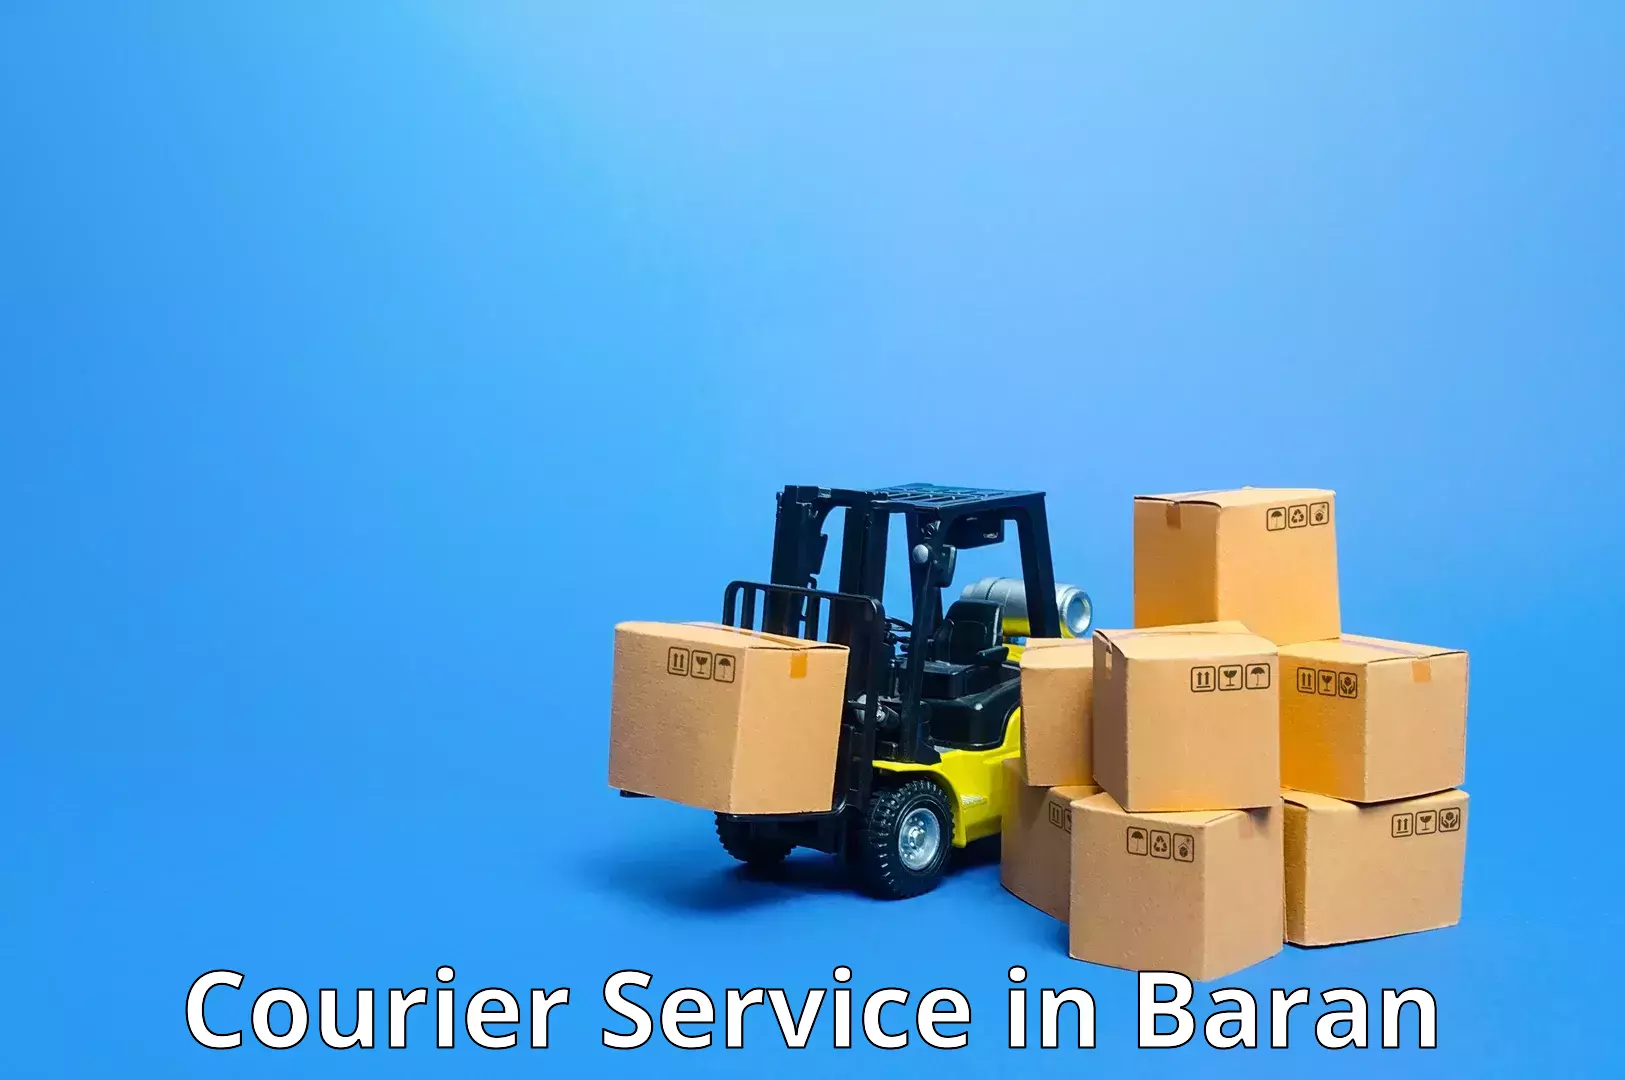 Supply chain efficiency in Baran